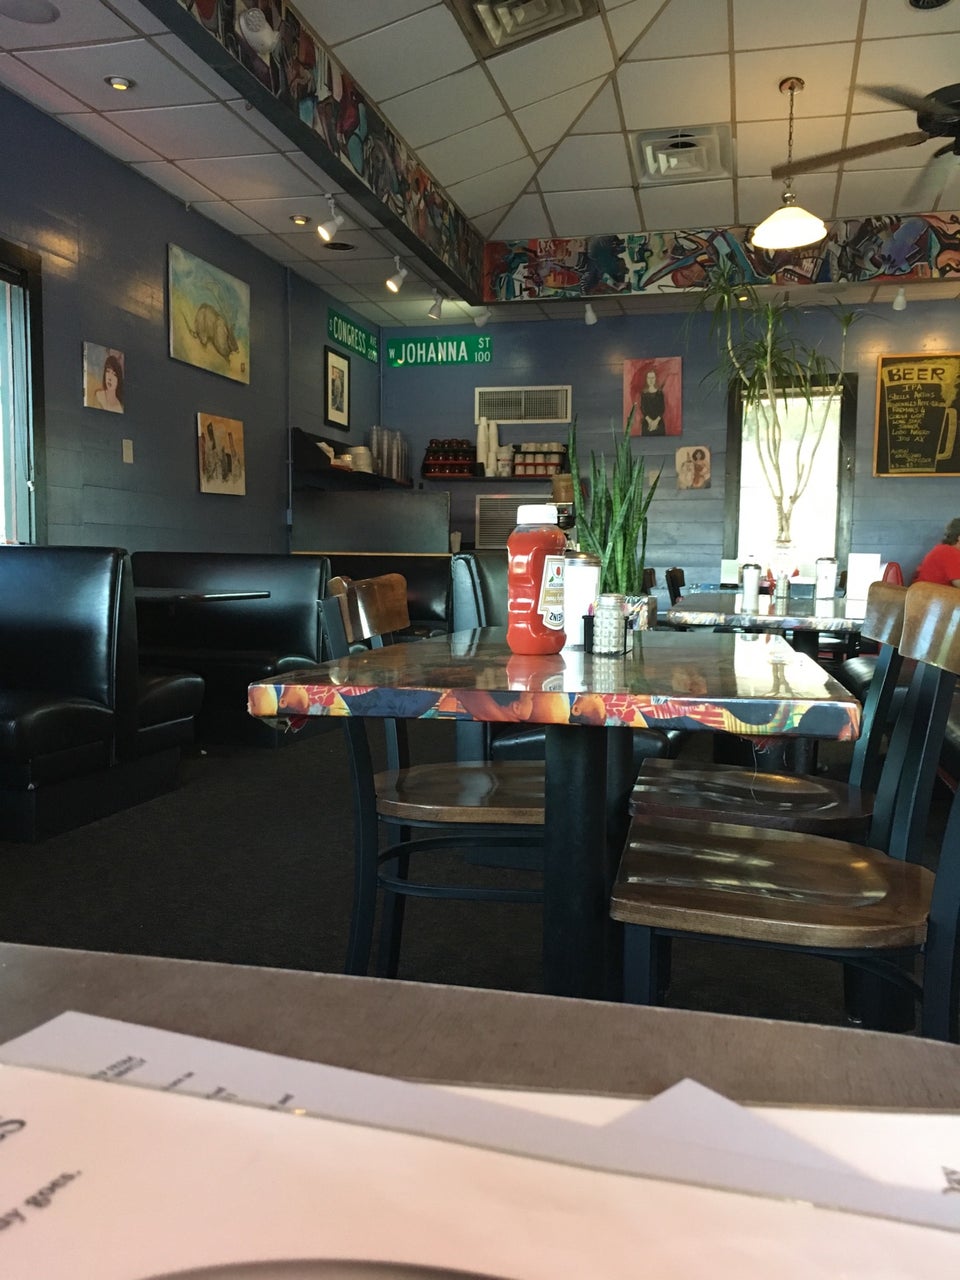 Photo of Magnolia Cafe South